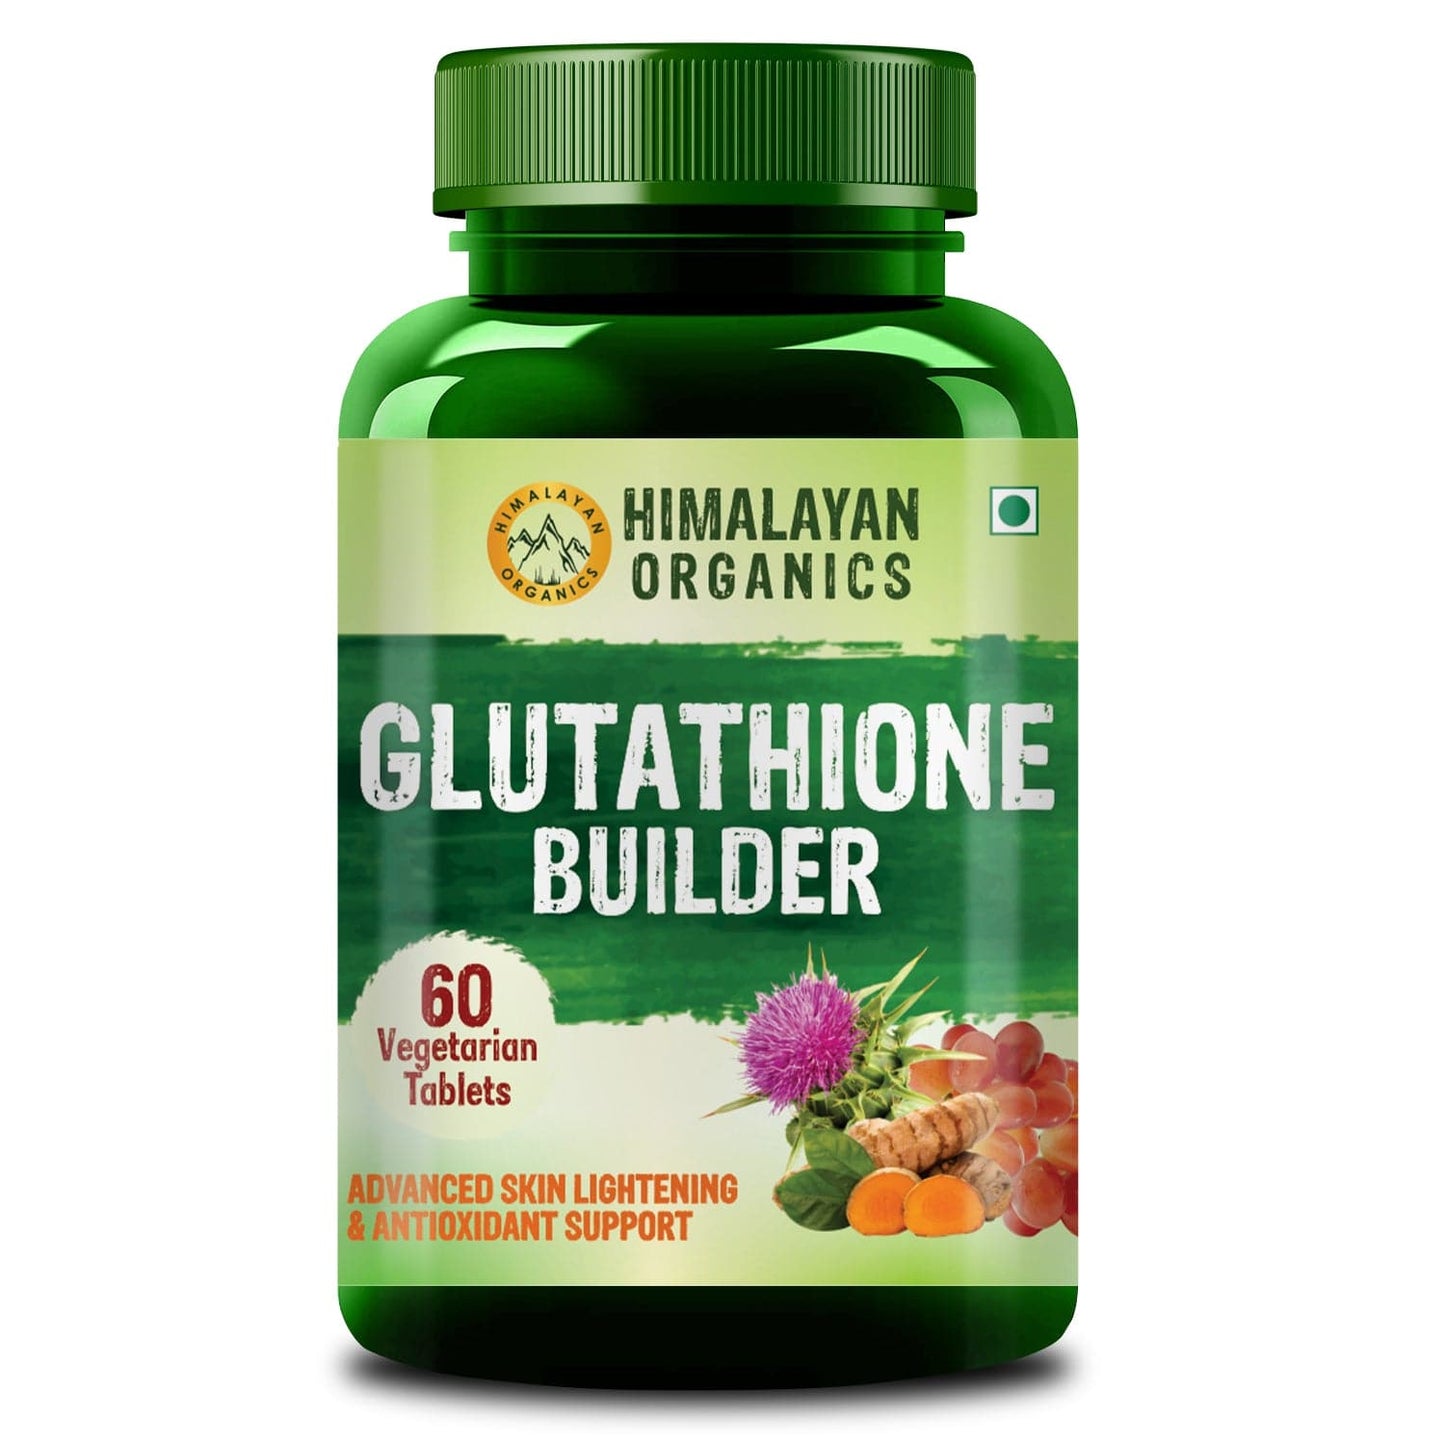 Himalayan Organics Glutathione Builder- 60 Veg Tablets